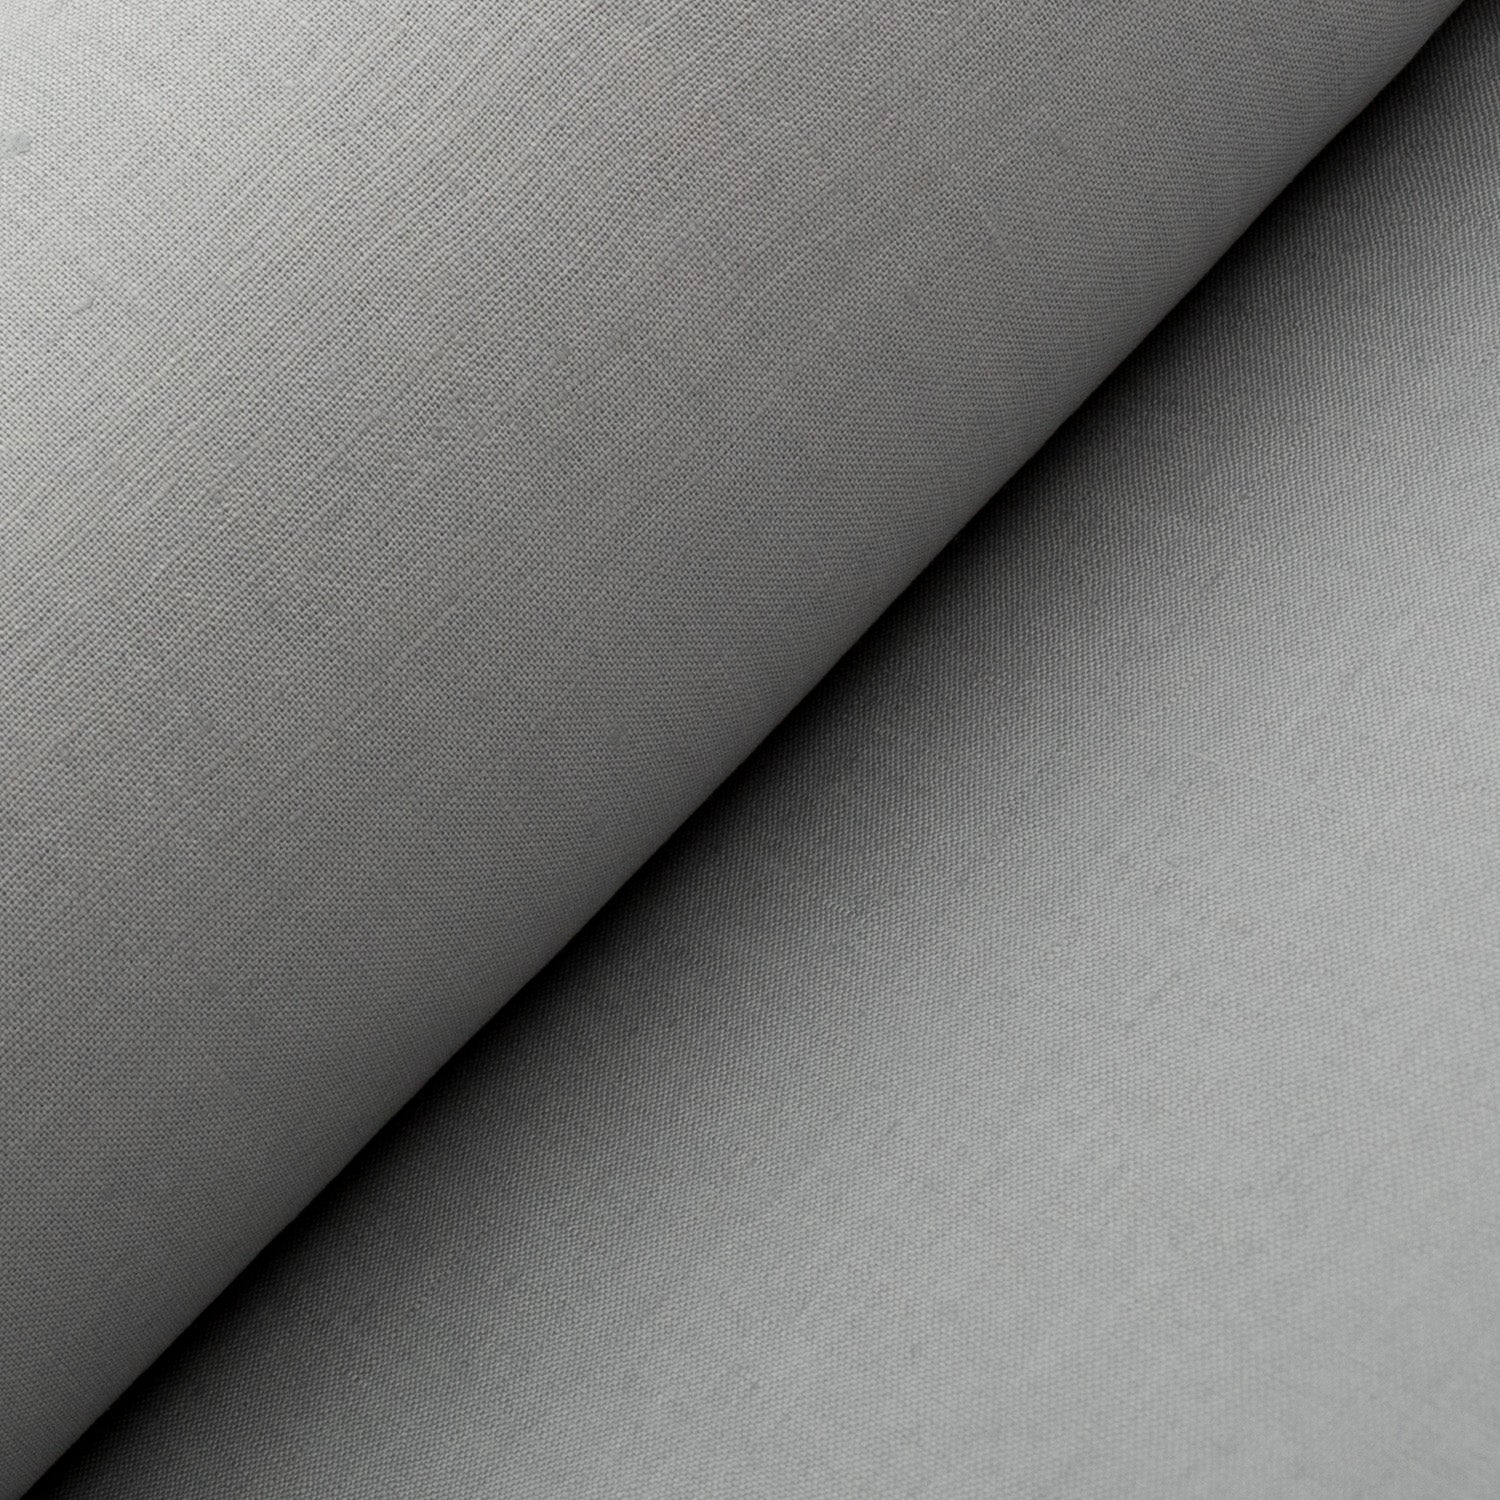 Dove Grey 100% Linen Fabric